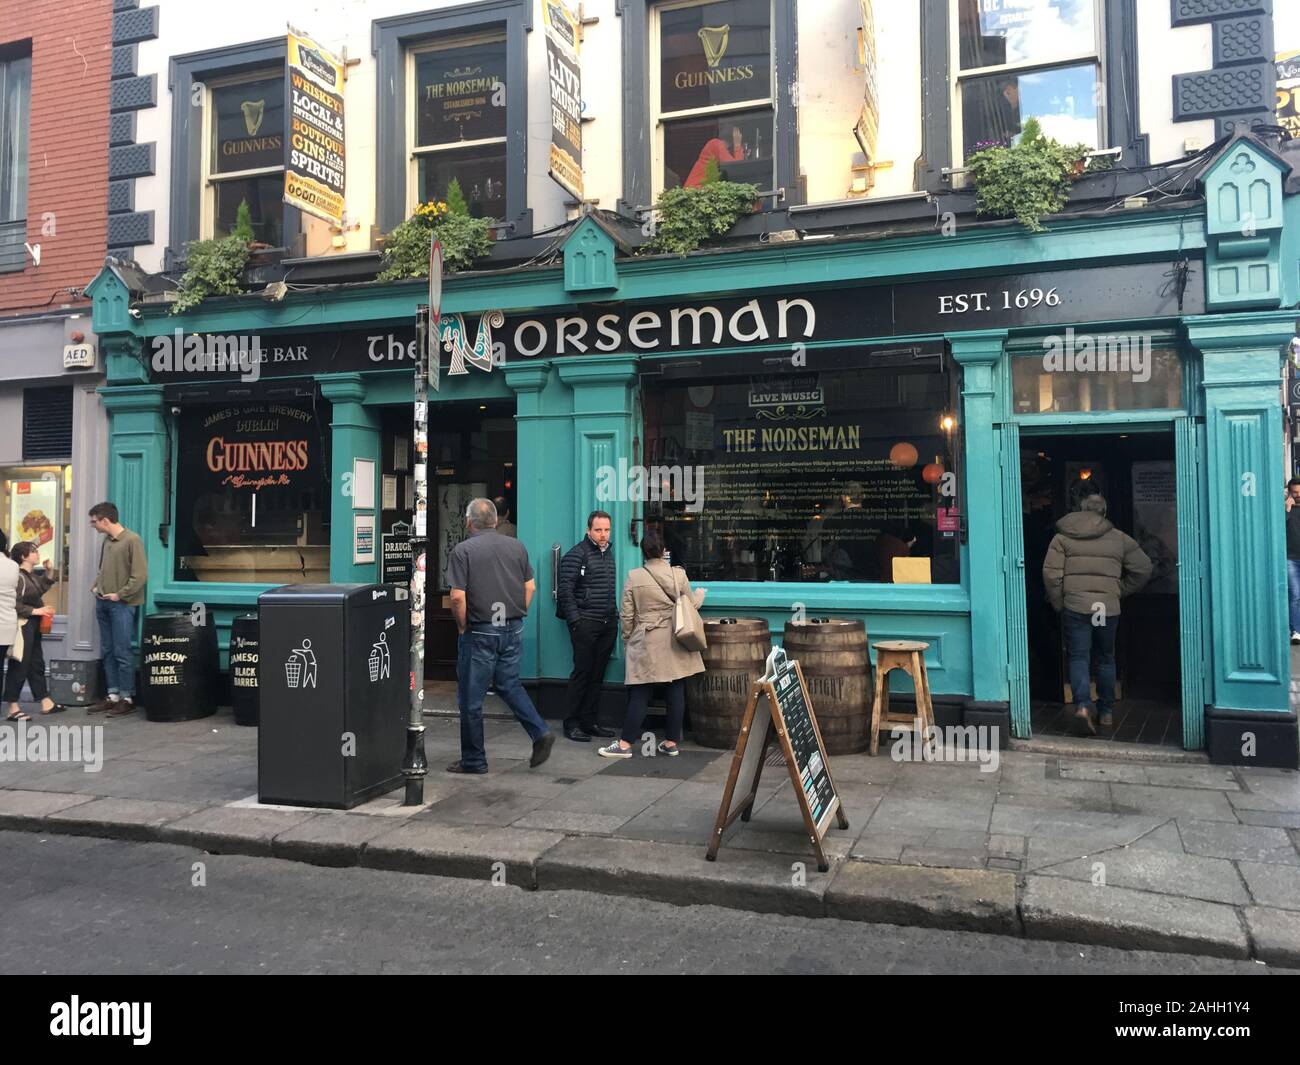 Dublin/Ireland - May 15, 2019: the Norseman is a popular tourist destination in Temple Bar region of Dublin. Stock Photo